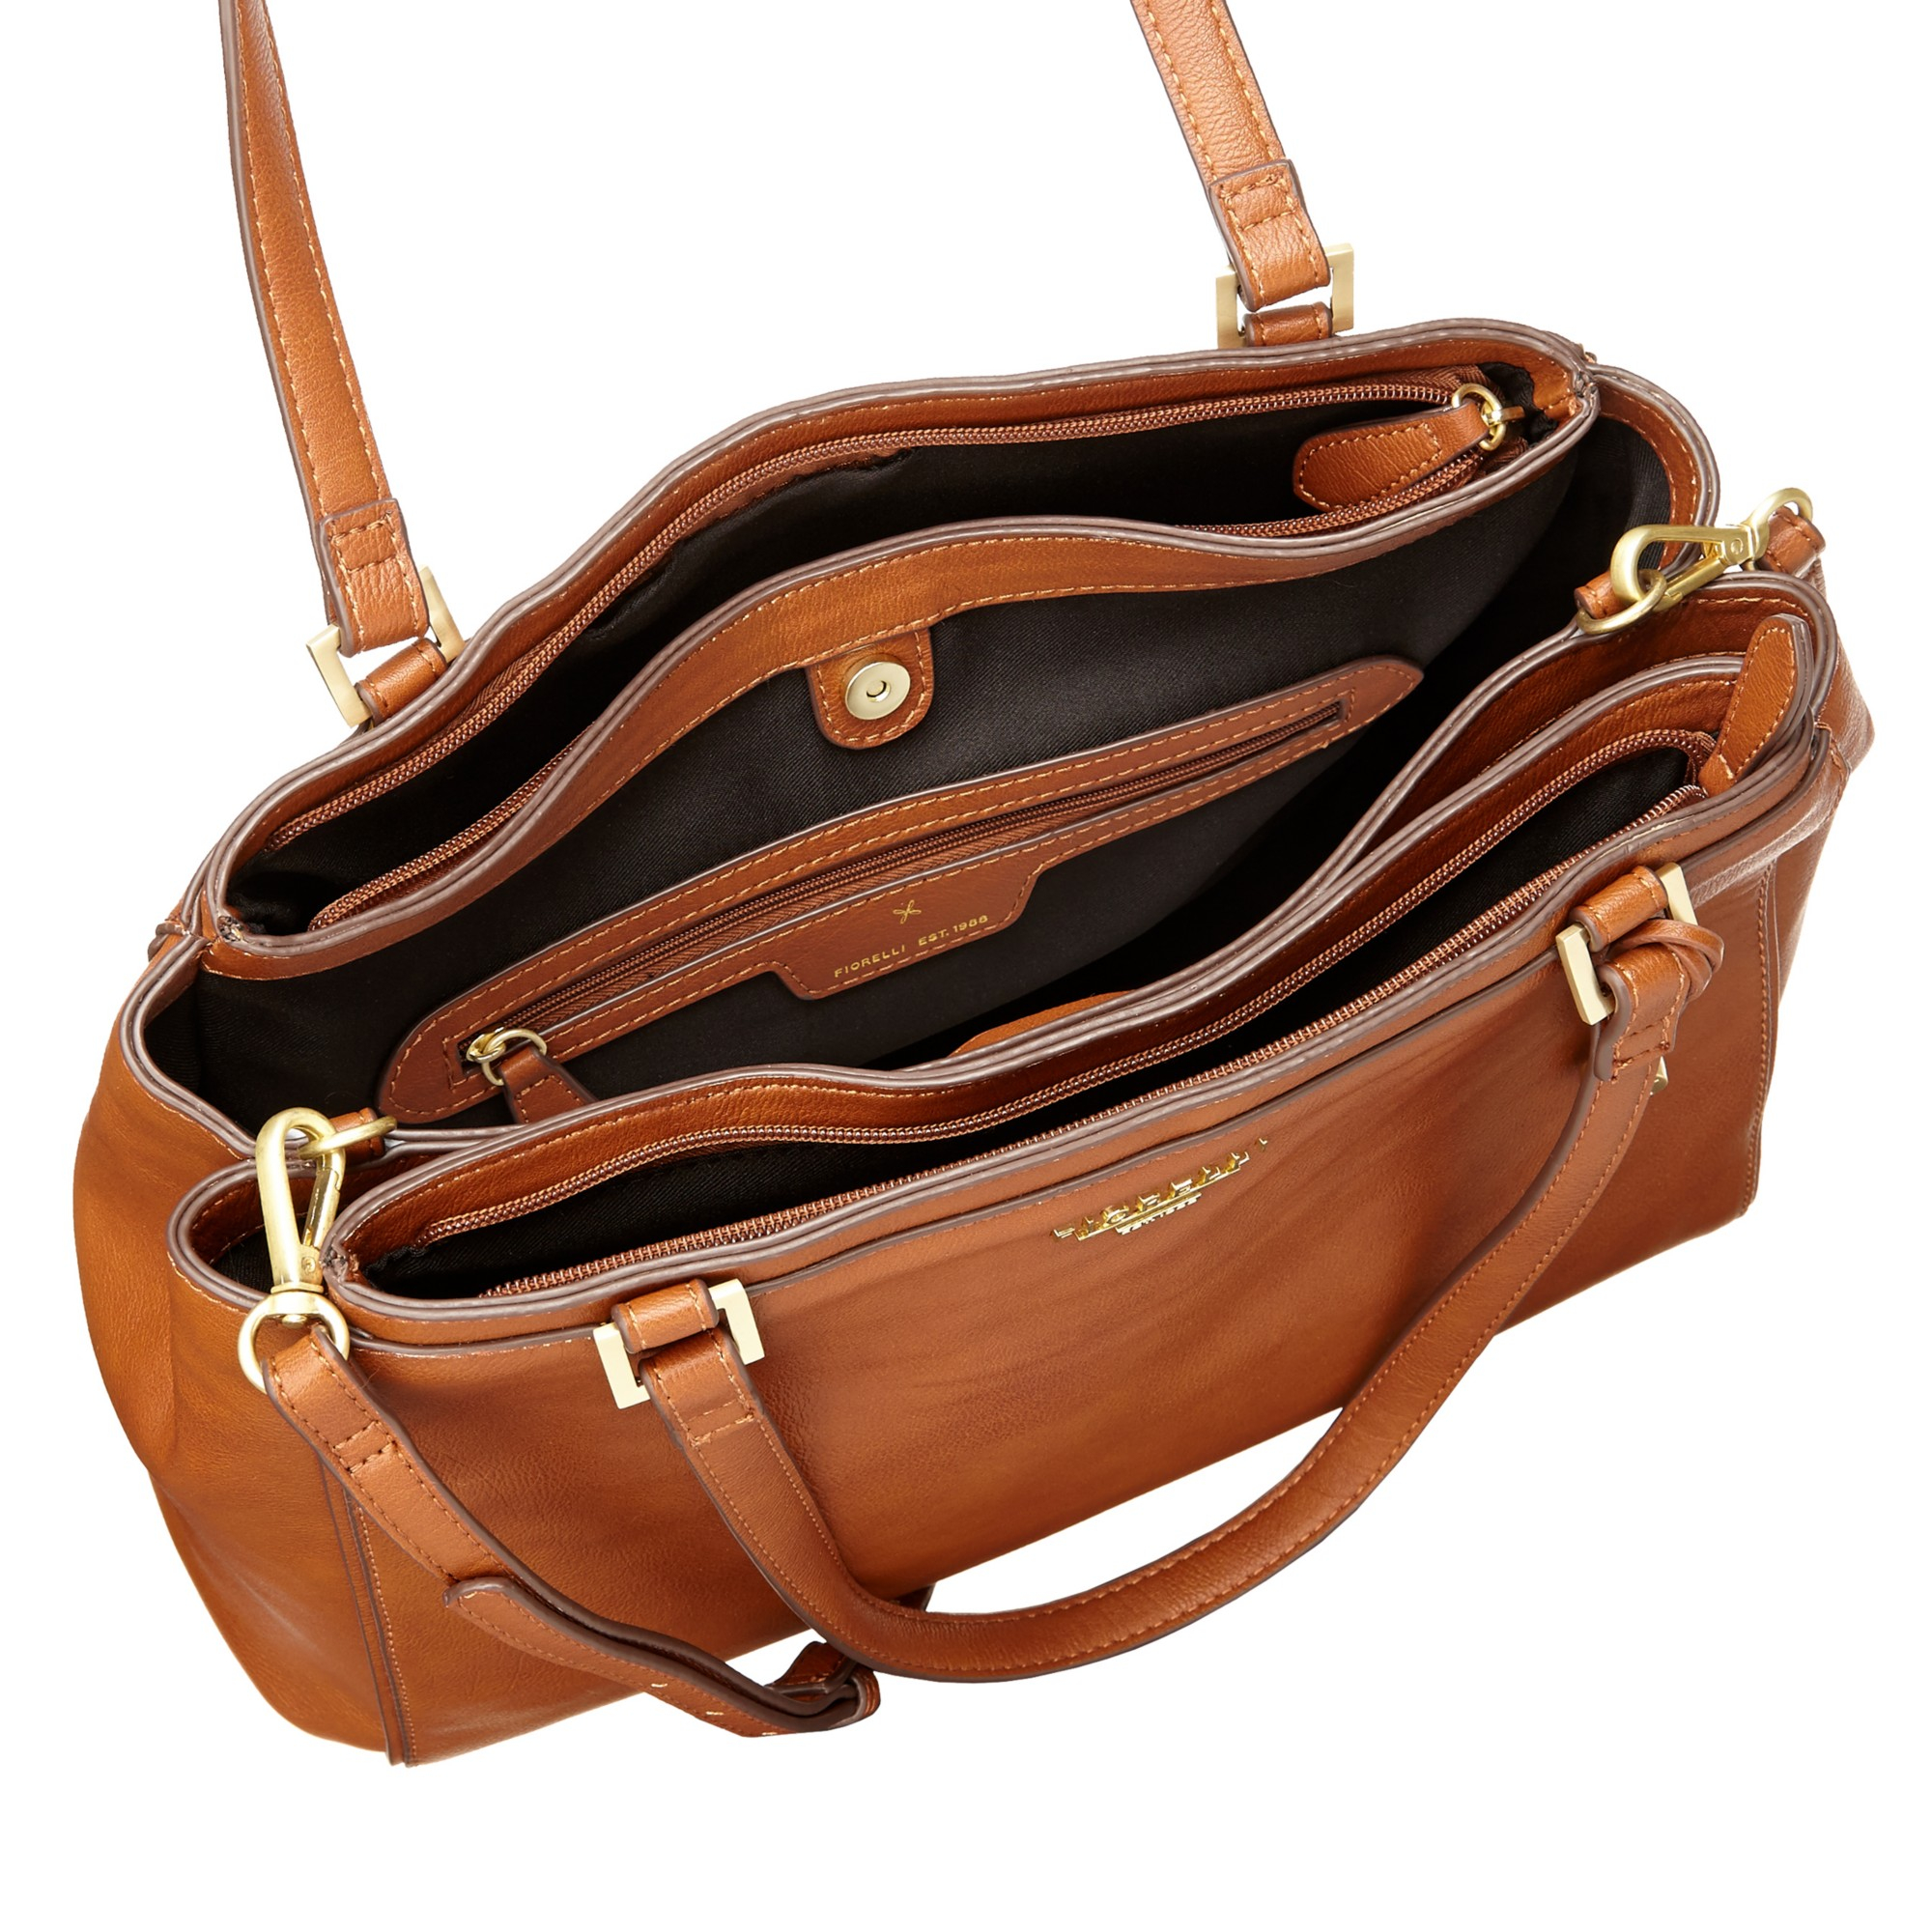 Lyst - Fiorelli Sophia Large Shoulder Bag in Brown